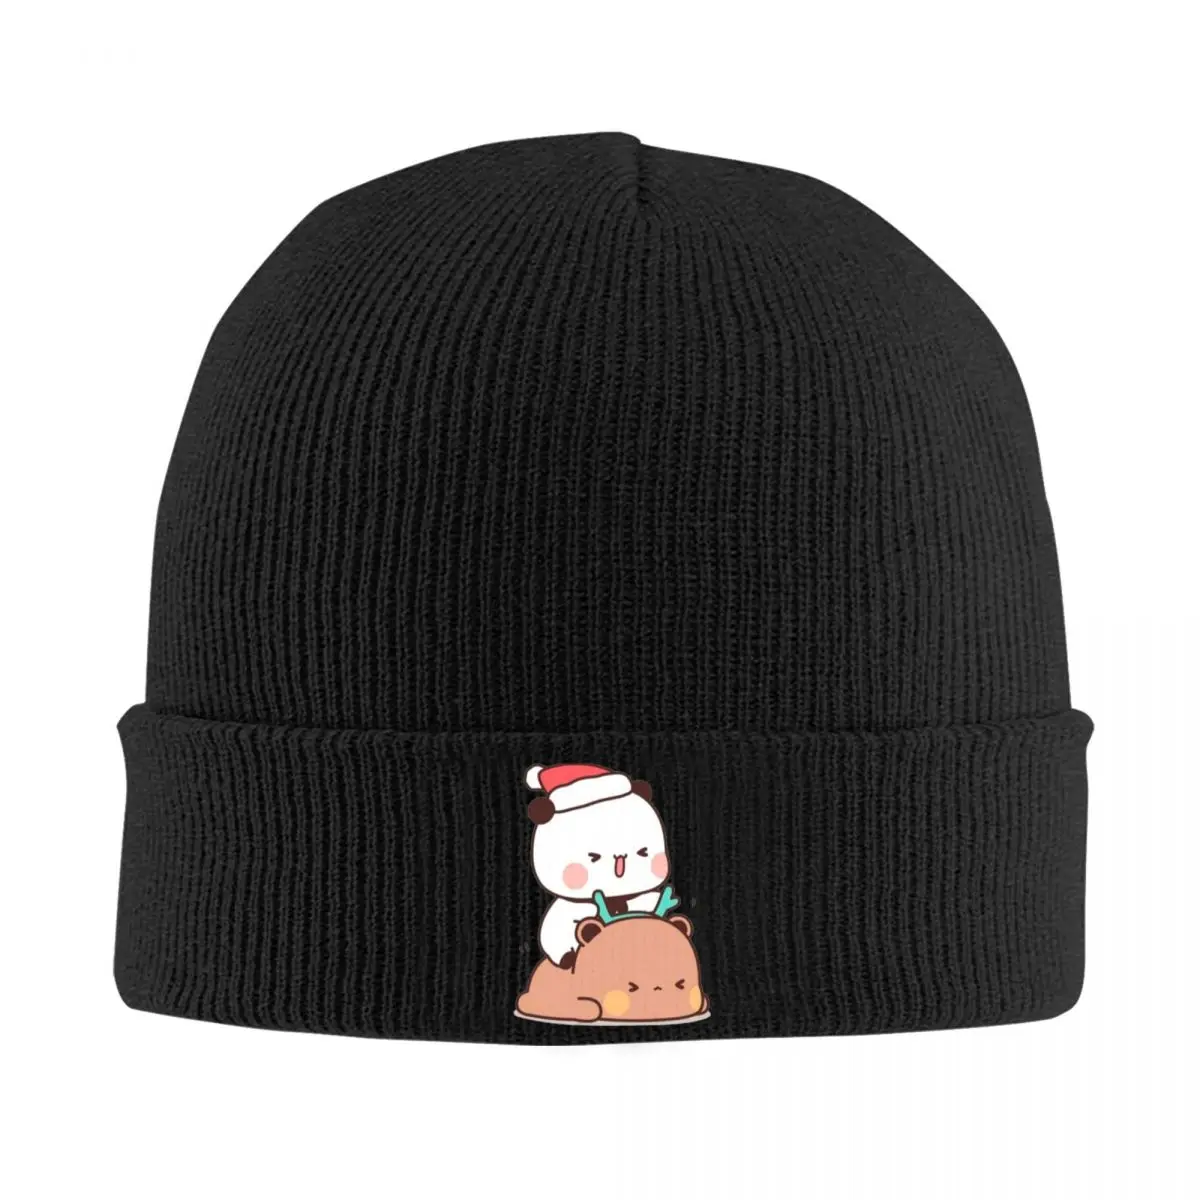 

Bubu And Dudu Knitted Hat for Women Men Beanies Winter Hats Acrylic Merry Christmas Hip Hop Cap